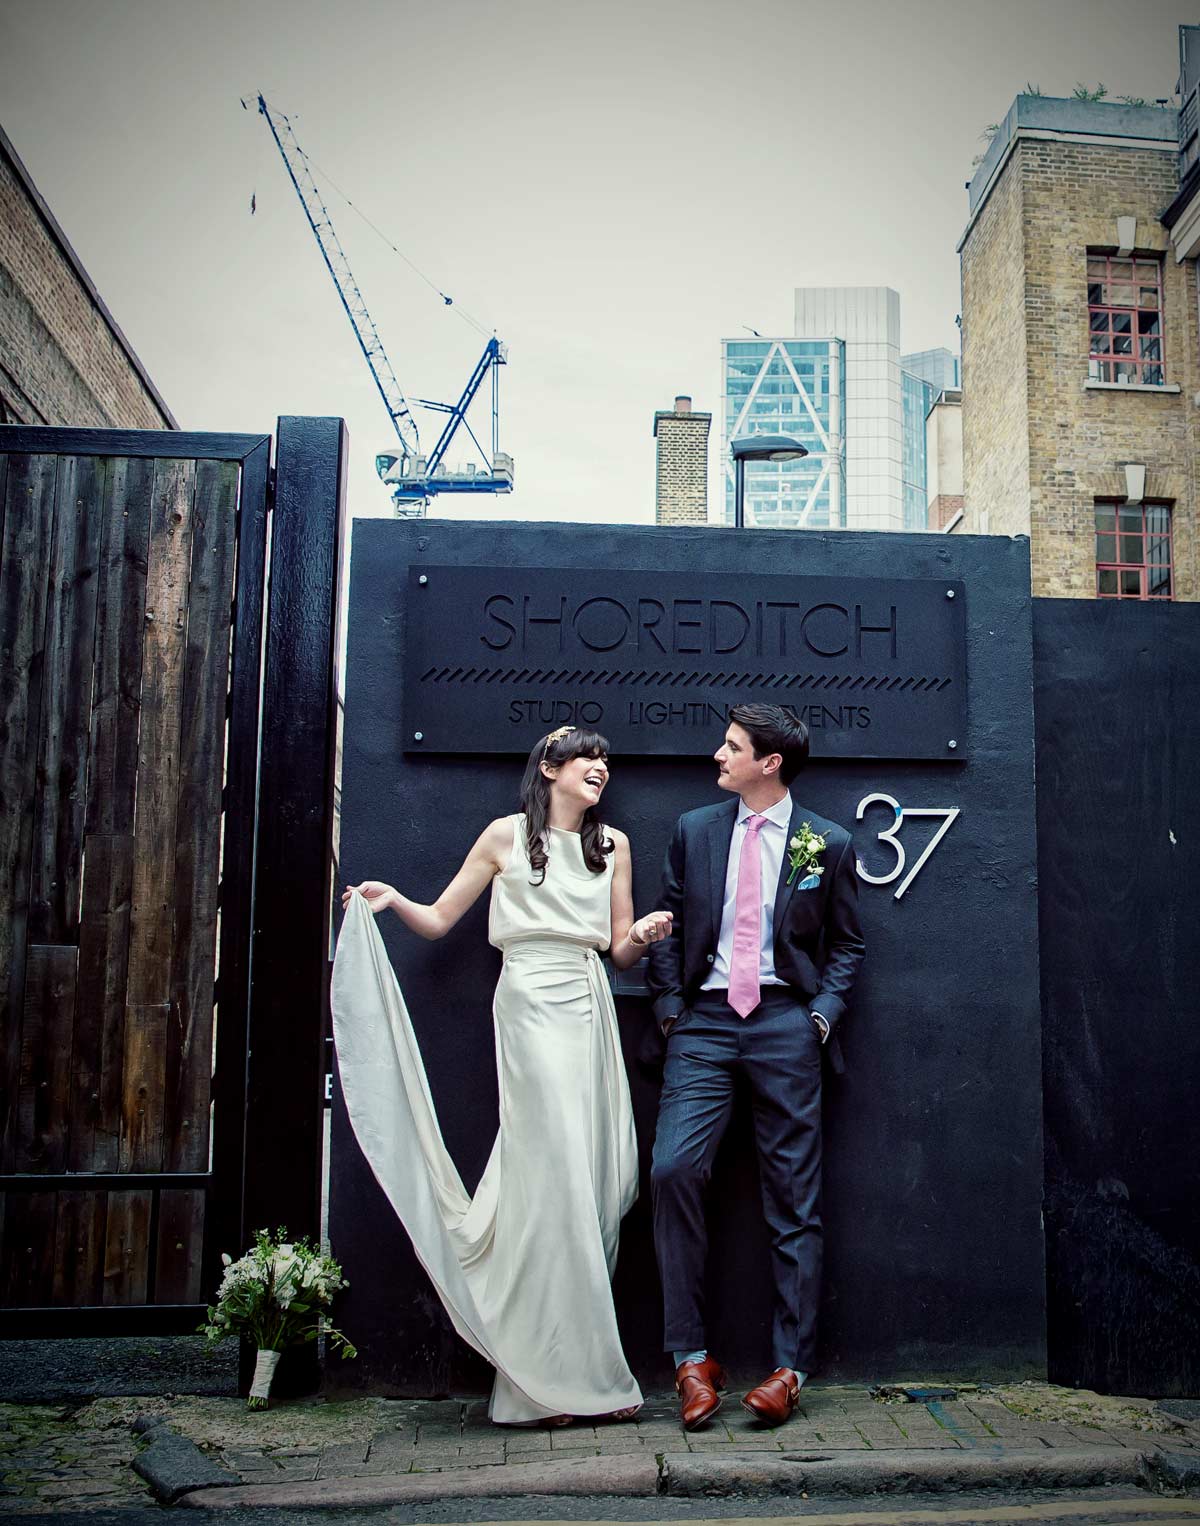 Wedding at Shoreditch Studios East London